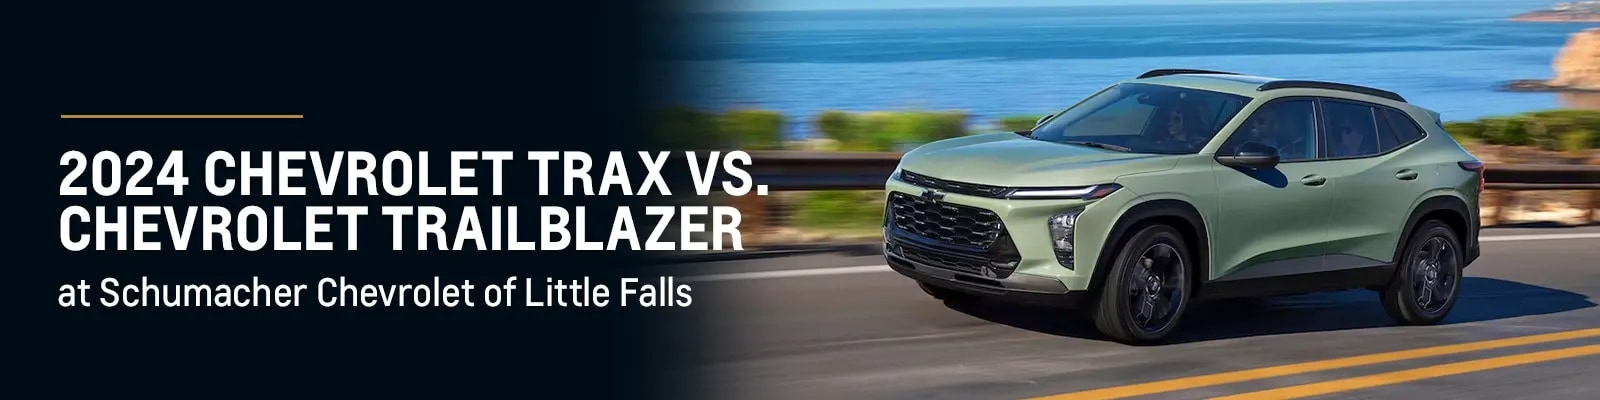 Trax VS Trailblazer - Schumacher Chevrolet of Little Falls